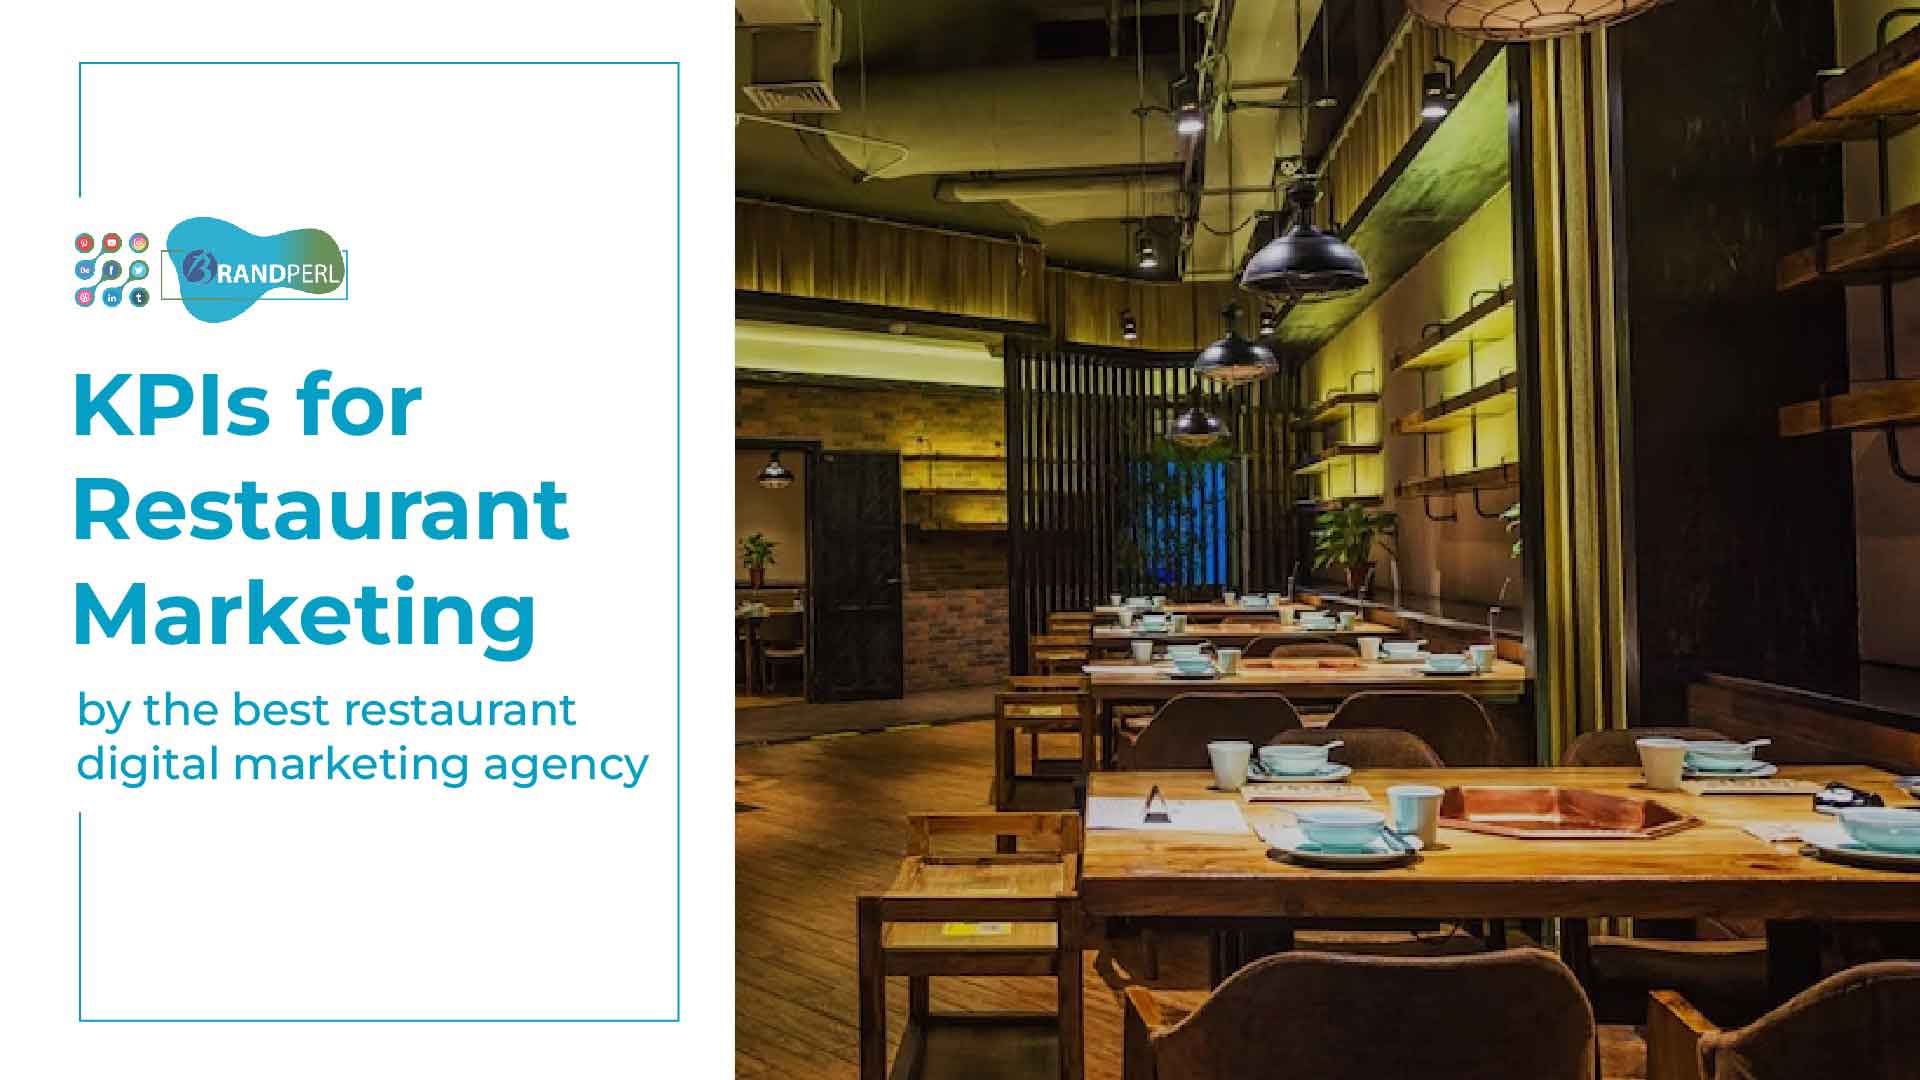 KPIs for Restaurant Marketing by the best restaurant digital marketing agency